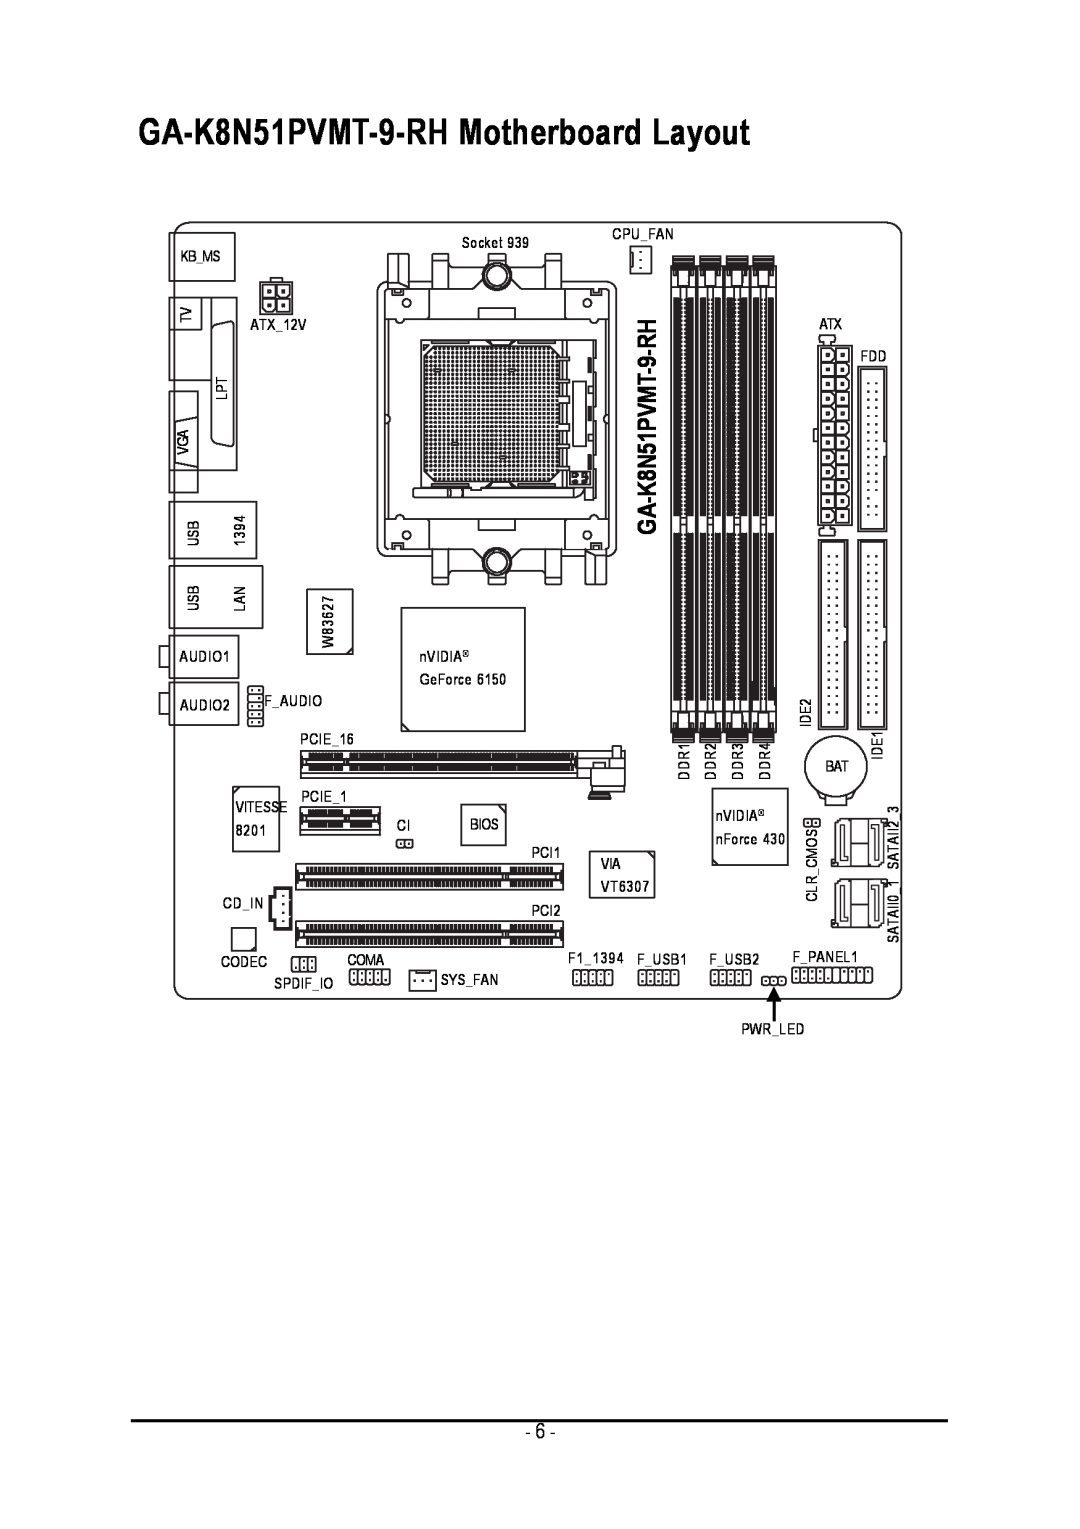 Gigabyte user manual GA-K8N51PVMT-9-RH Motherboard Layout 